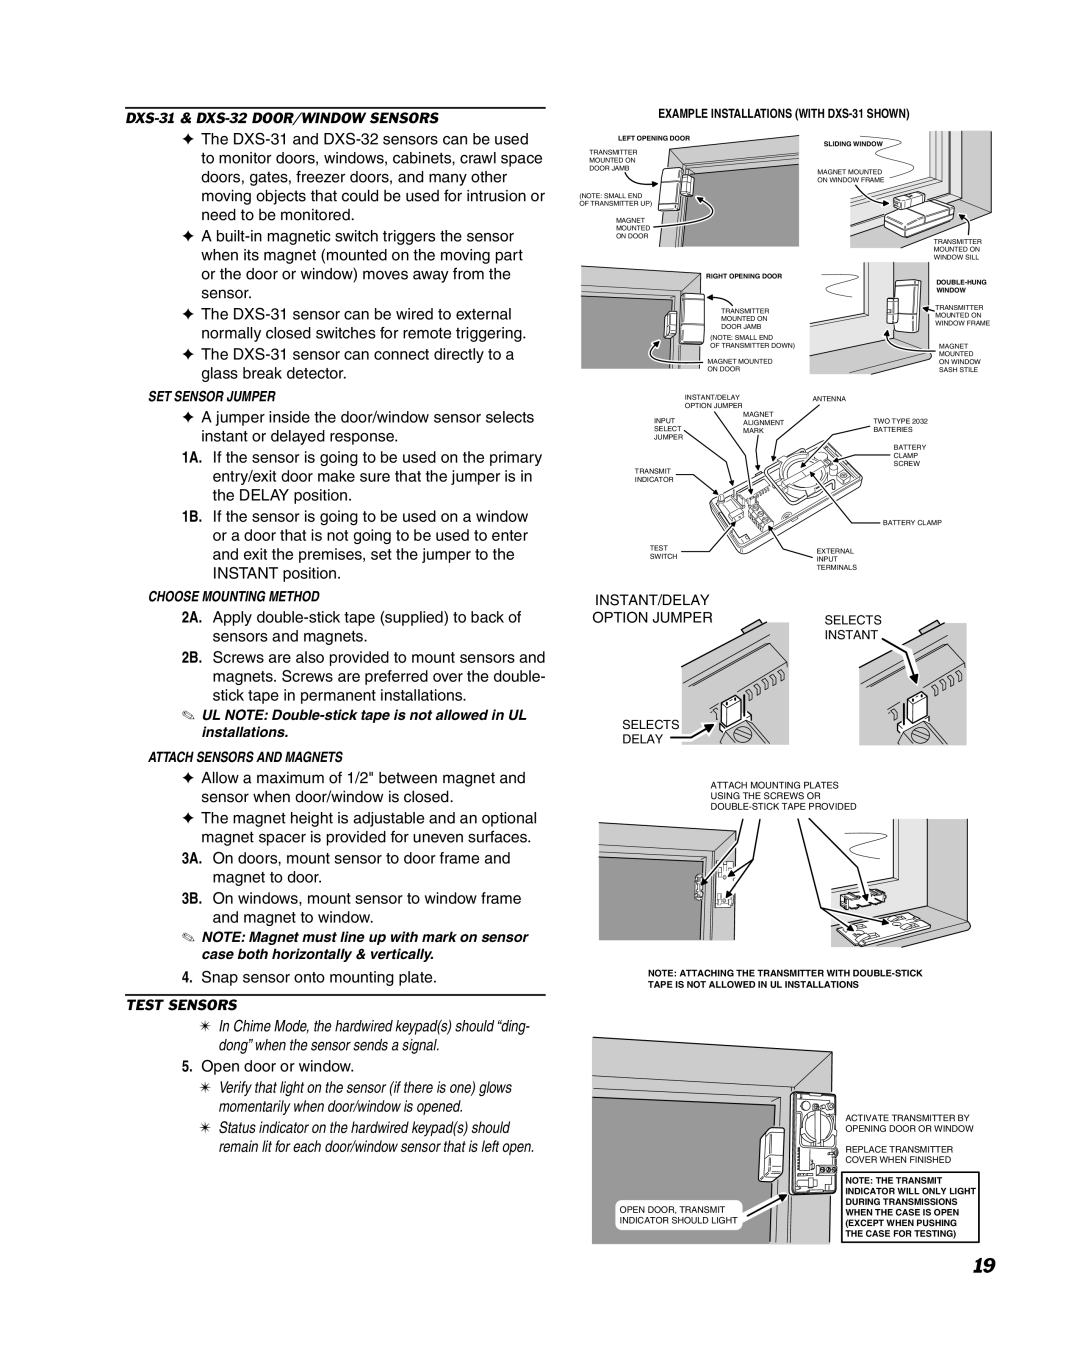 Linear DUAL 824 manual DXS-31& DXS-32DOOR/WINDOW SENSORS, Test Sensors, The DXS-31and DXS-32sensors can be used 